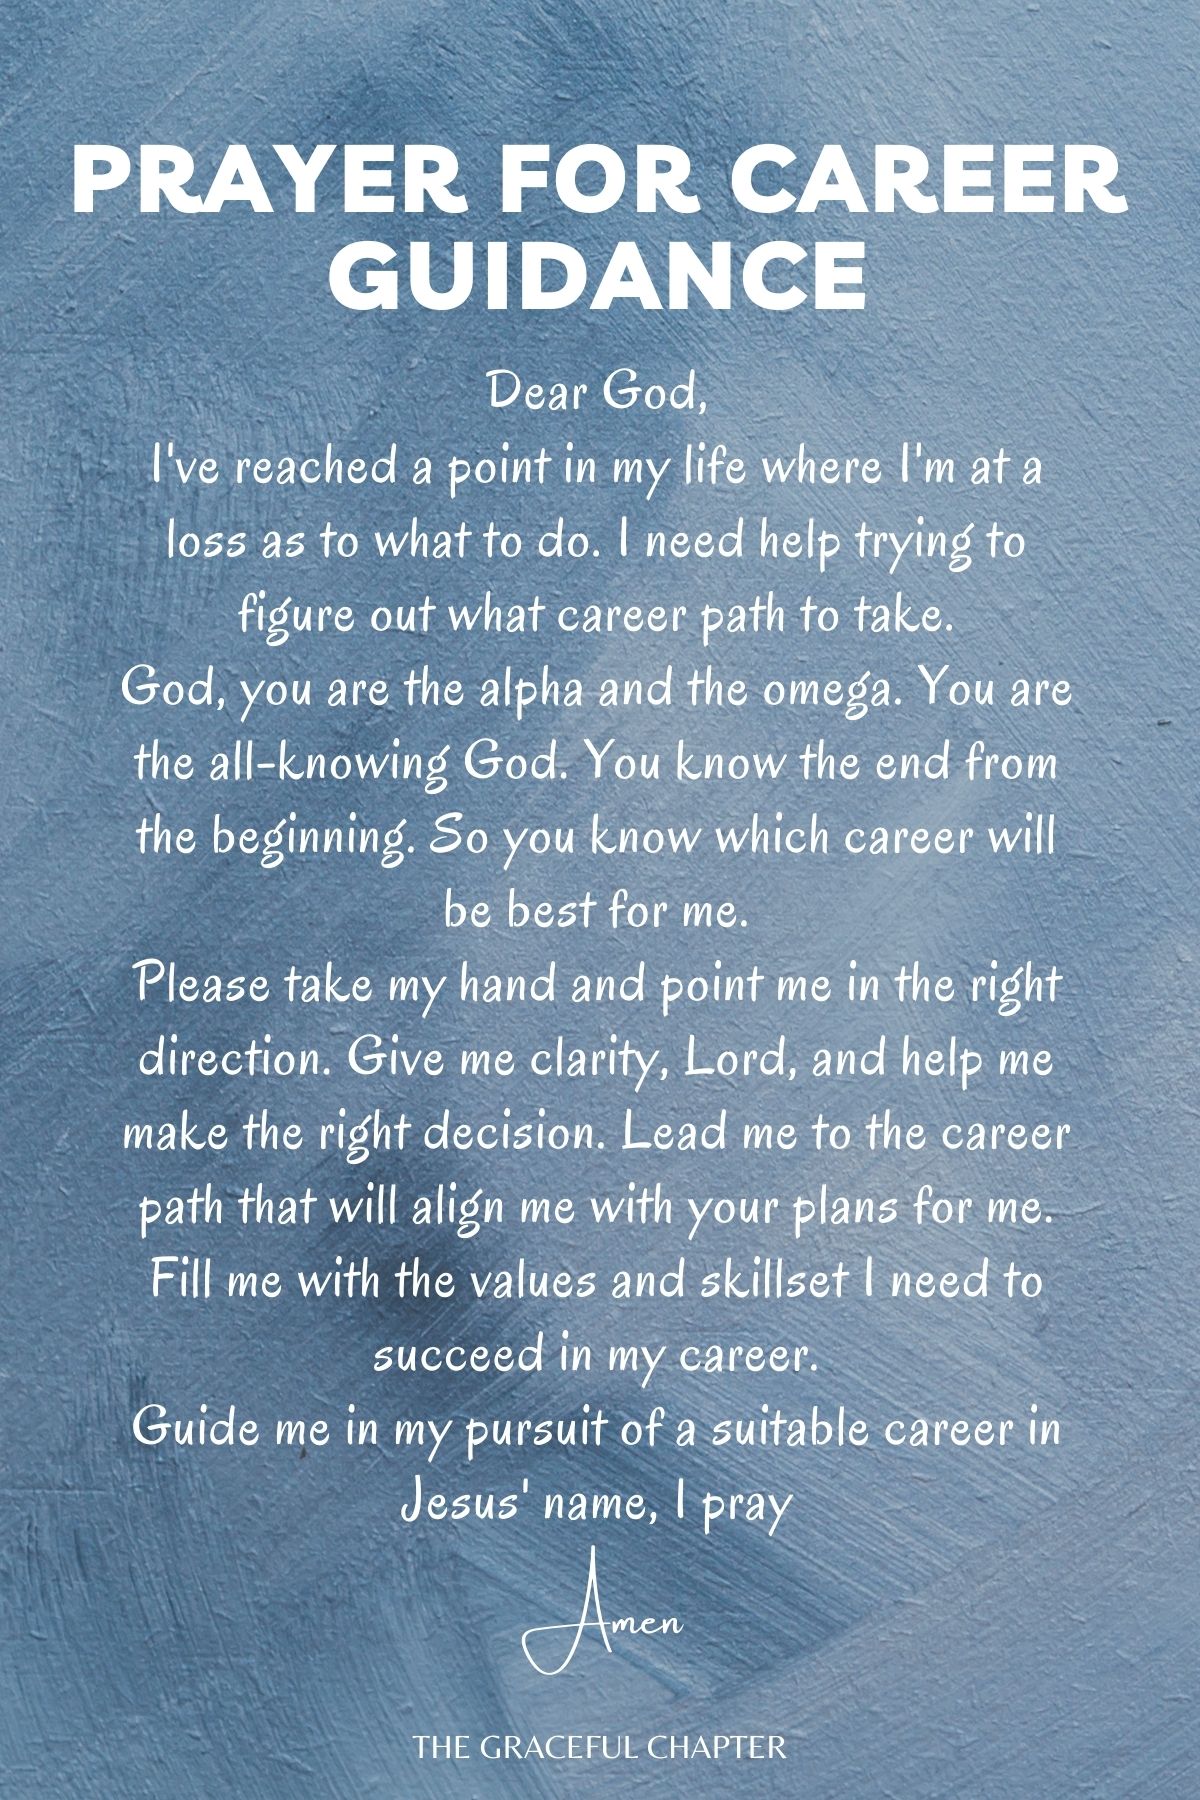 Prayer for career guidance - prayers for employment